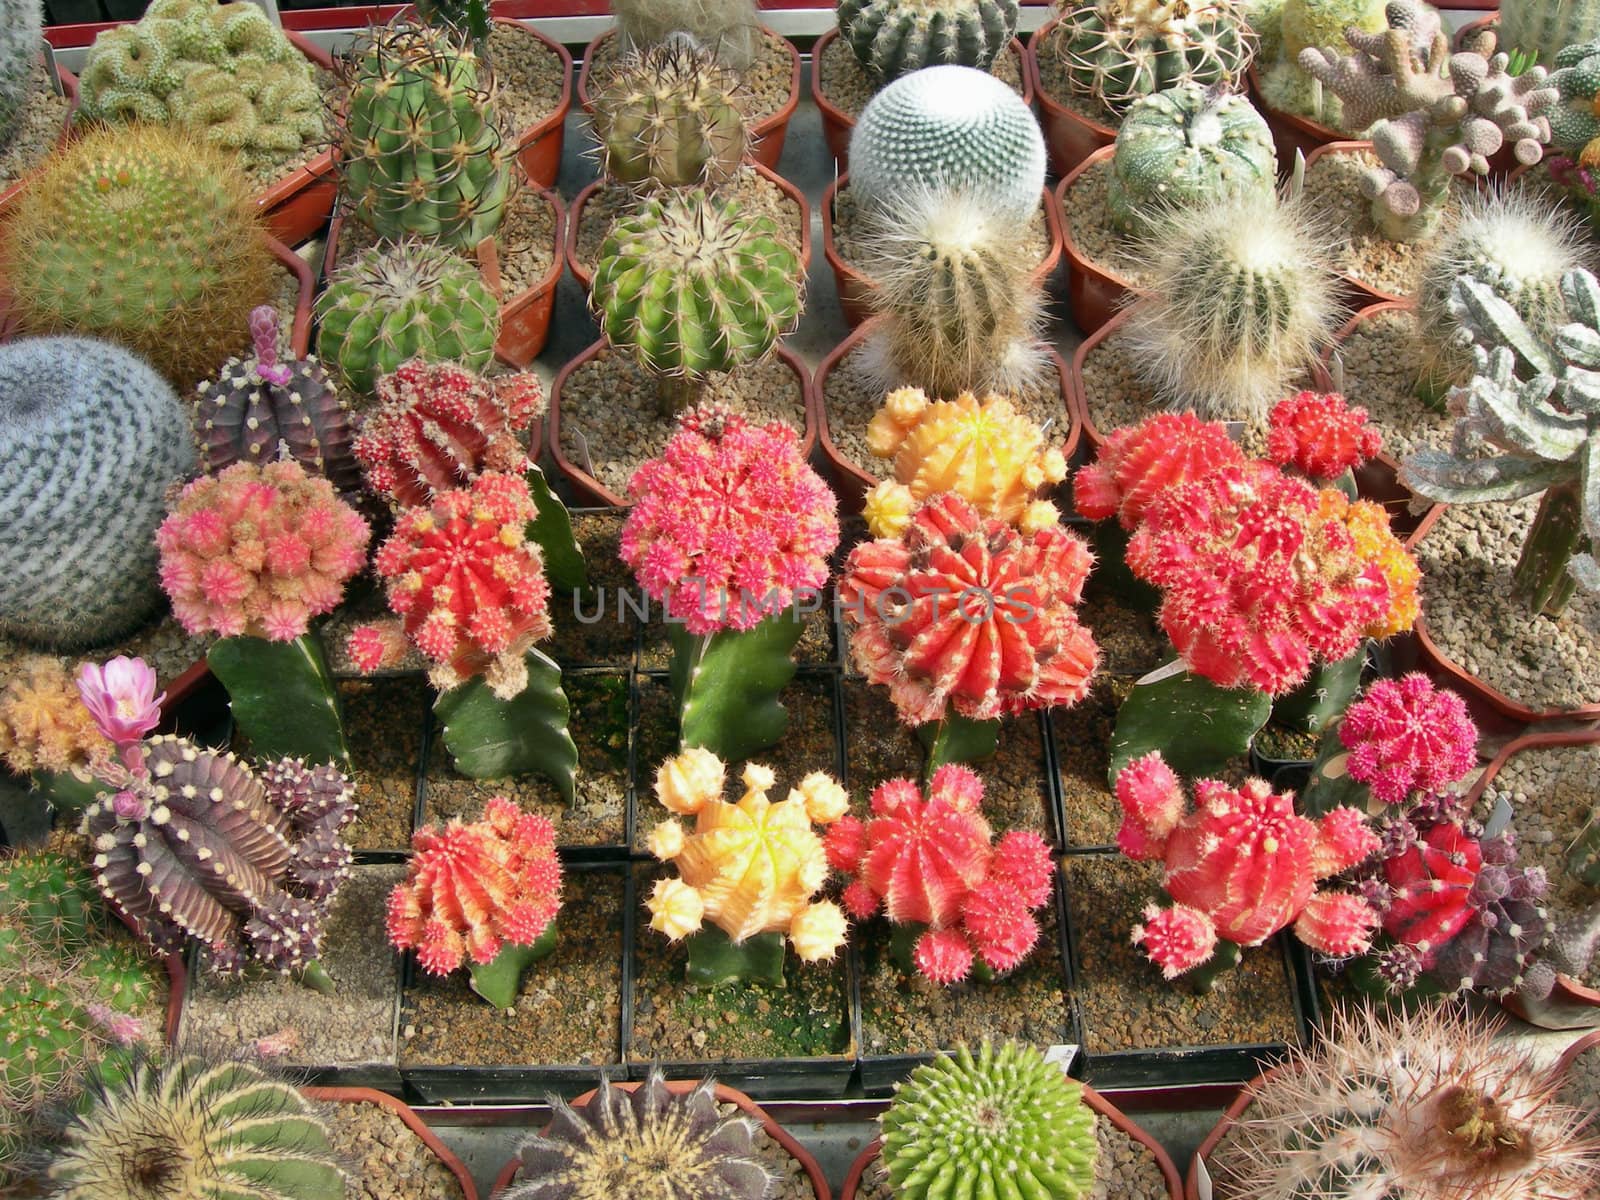                     Various rd cactus plants in flower pots